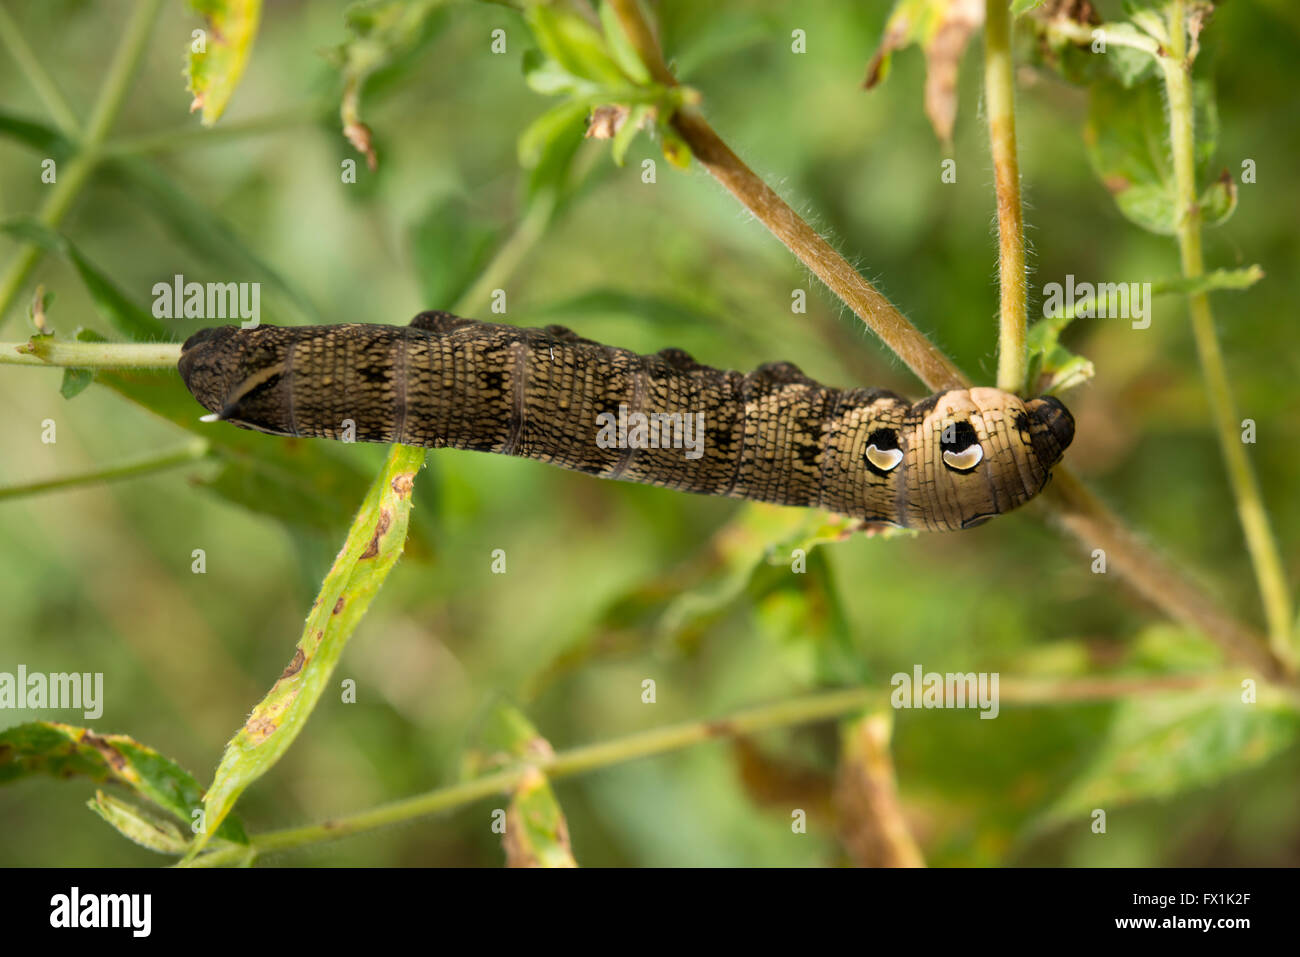 Caterpillar of Elephant hawk moth feeding on willowherb Stock Photo